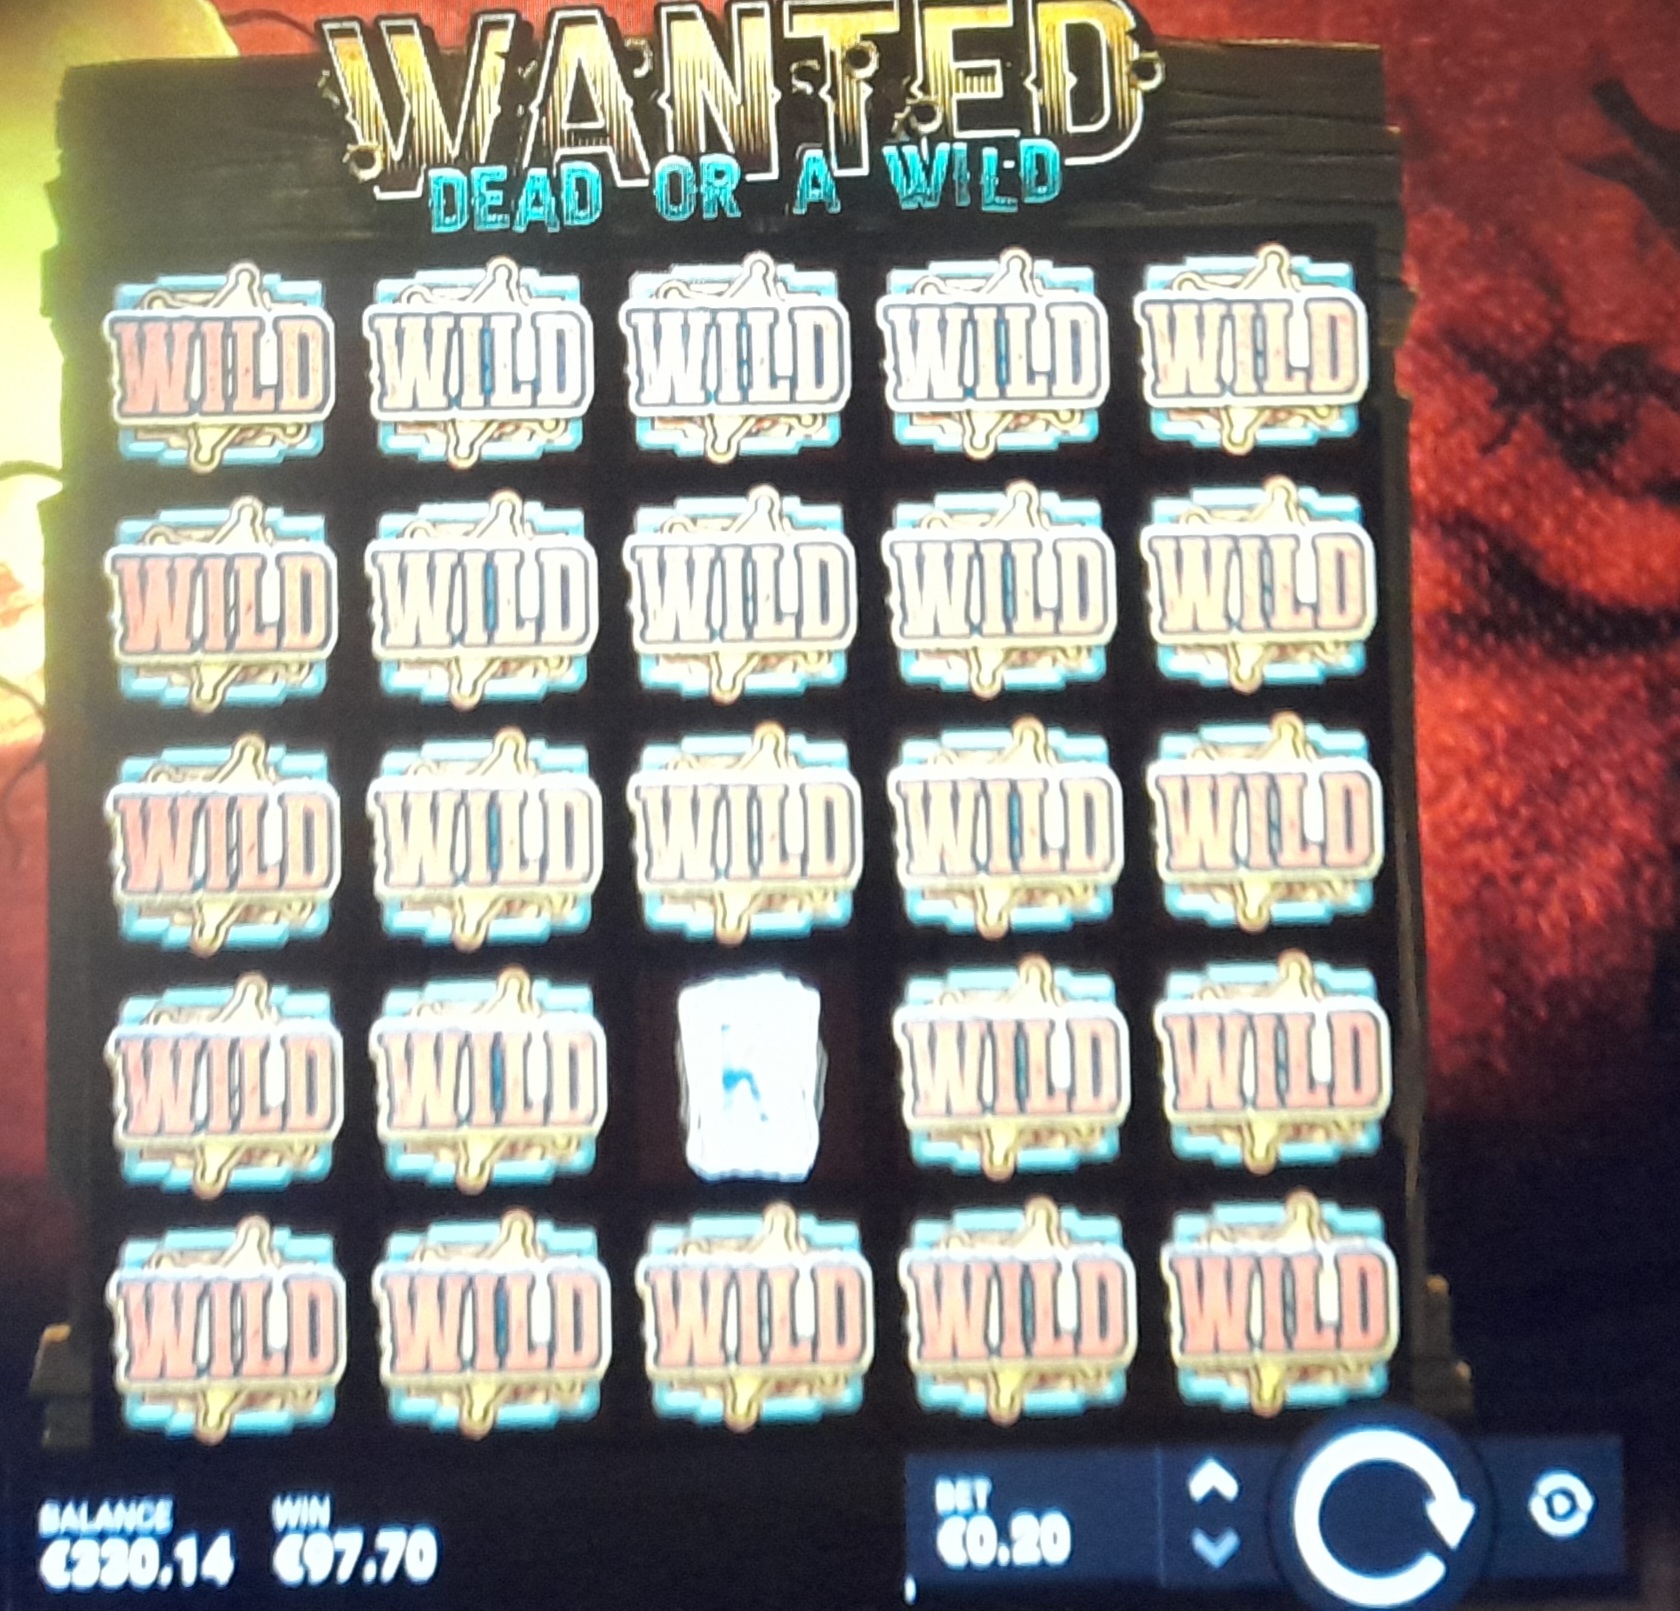 Wanted Dead or a Wild – UltraCasino (97.70 eur / 0.20 bet) | juugeli1